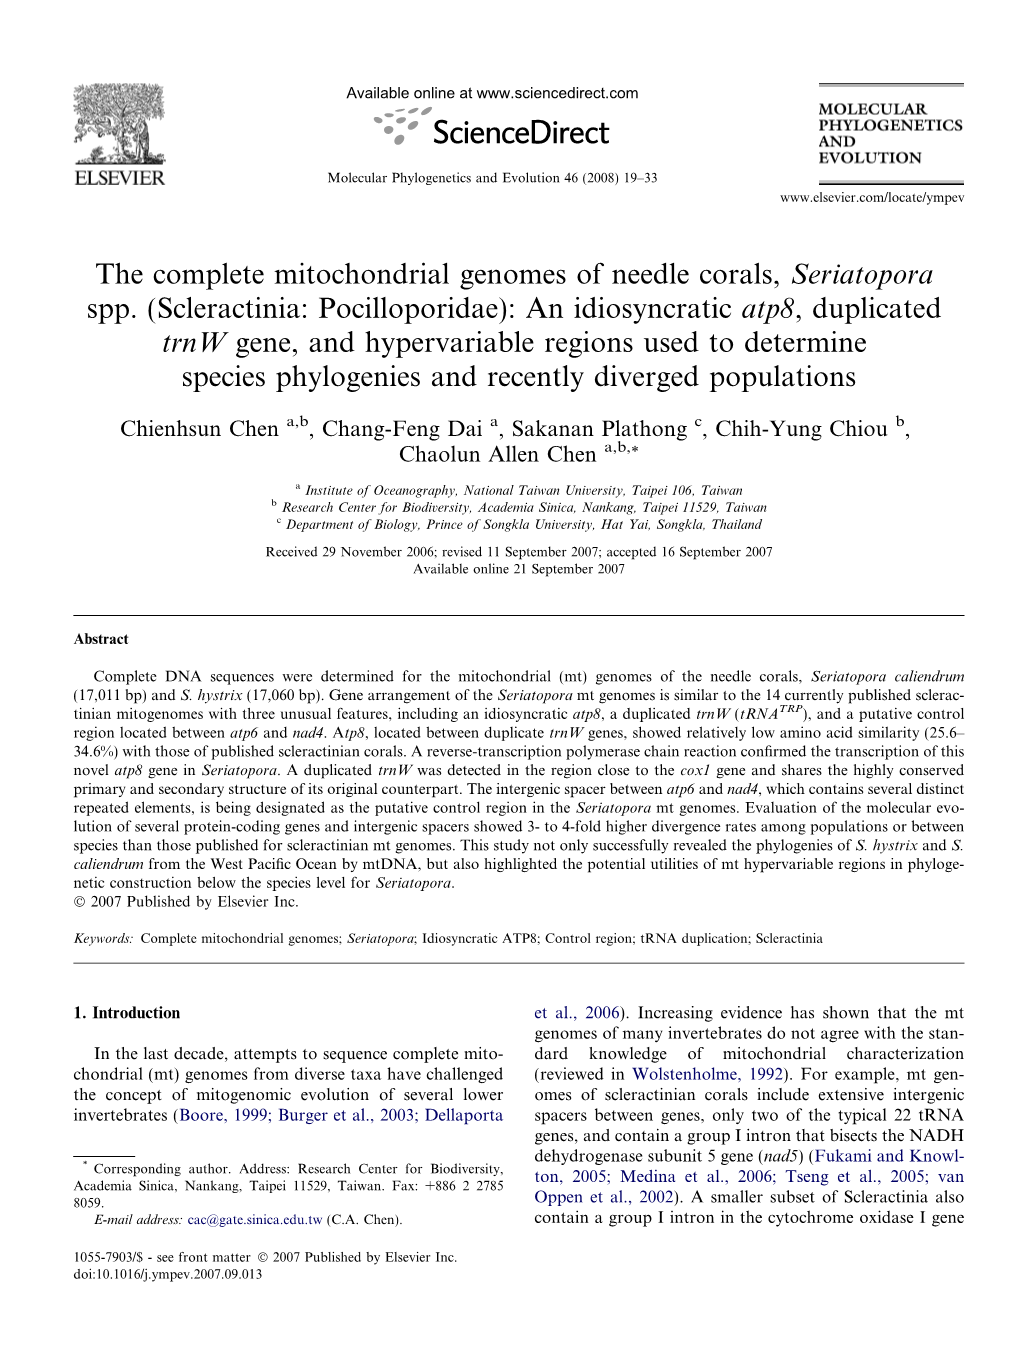 The Complete Mitochondrial Genomes of Needle Corals, Seriatopora Spp